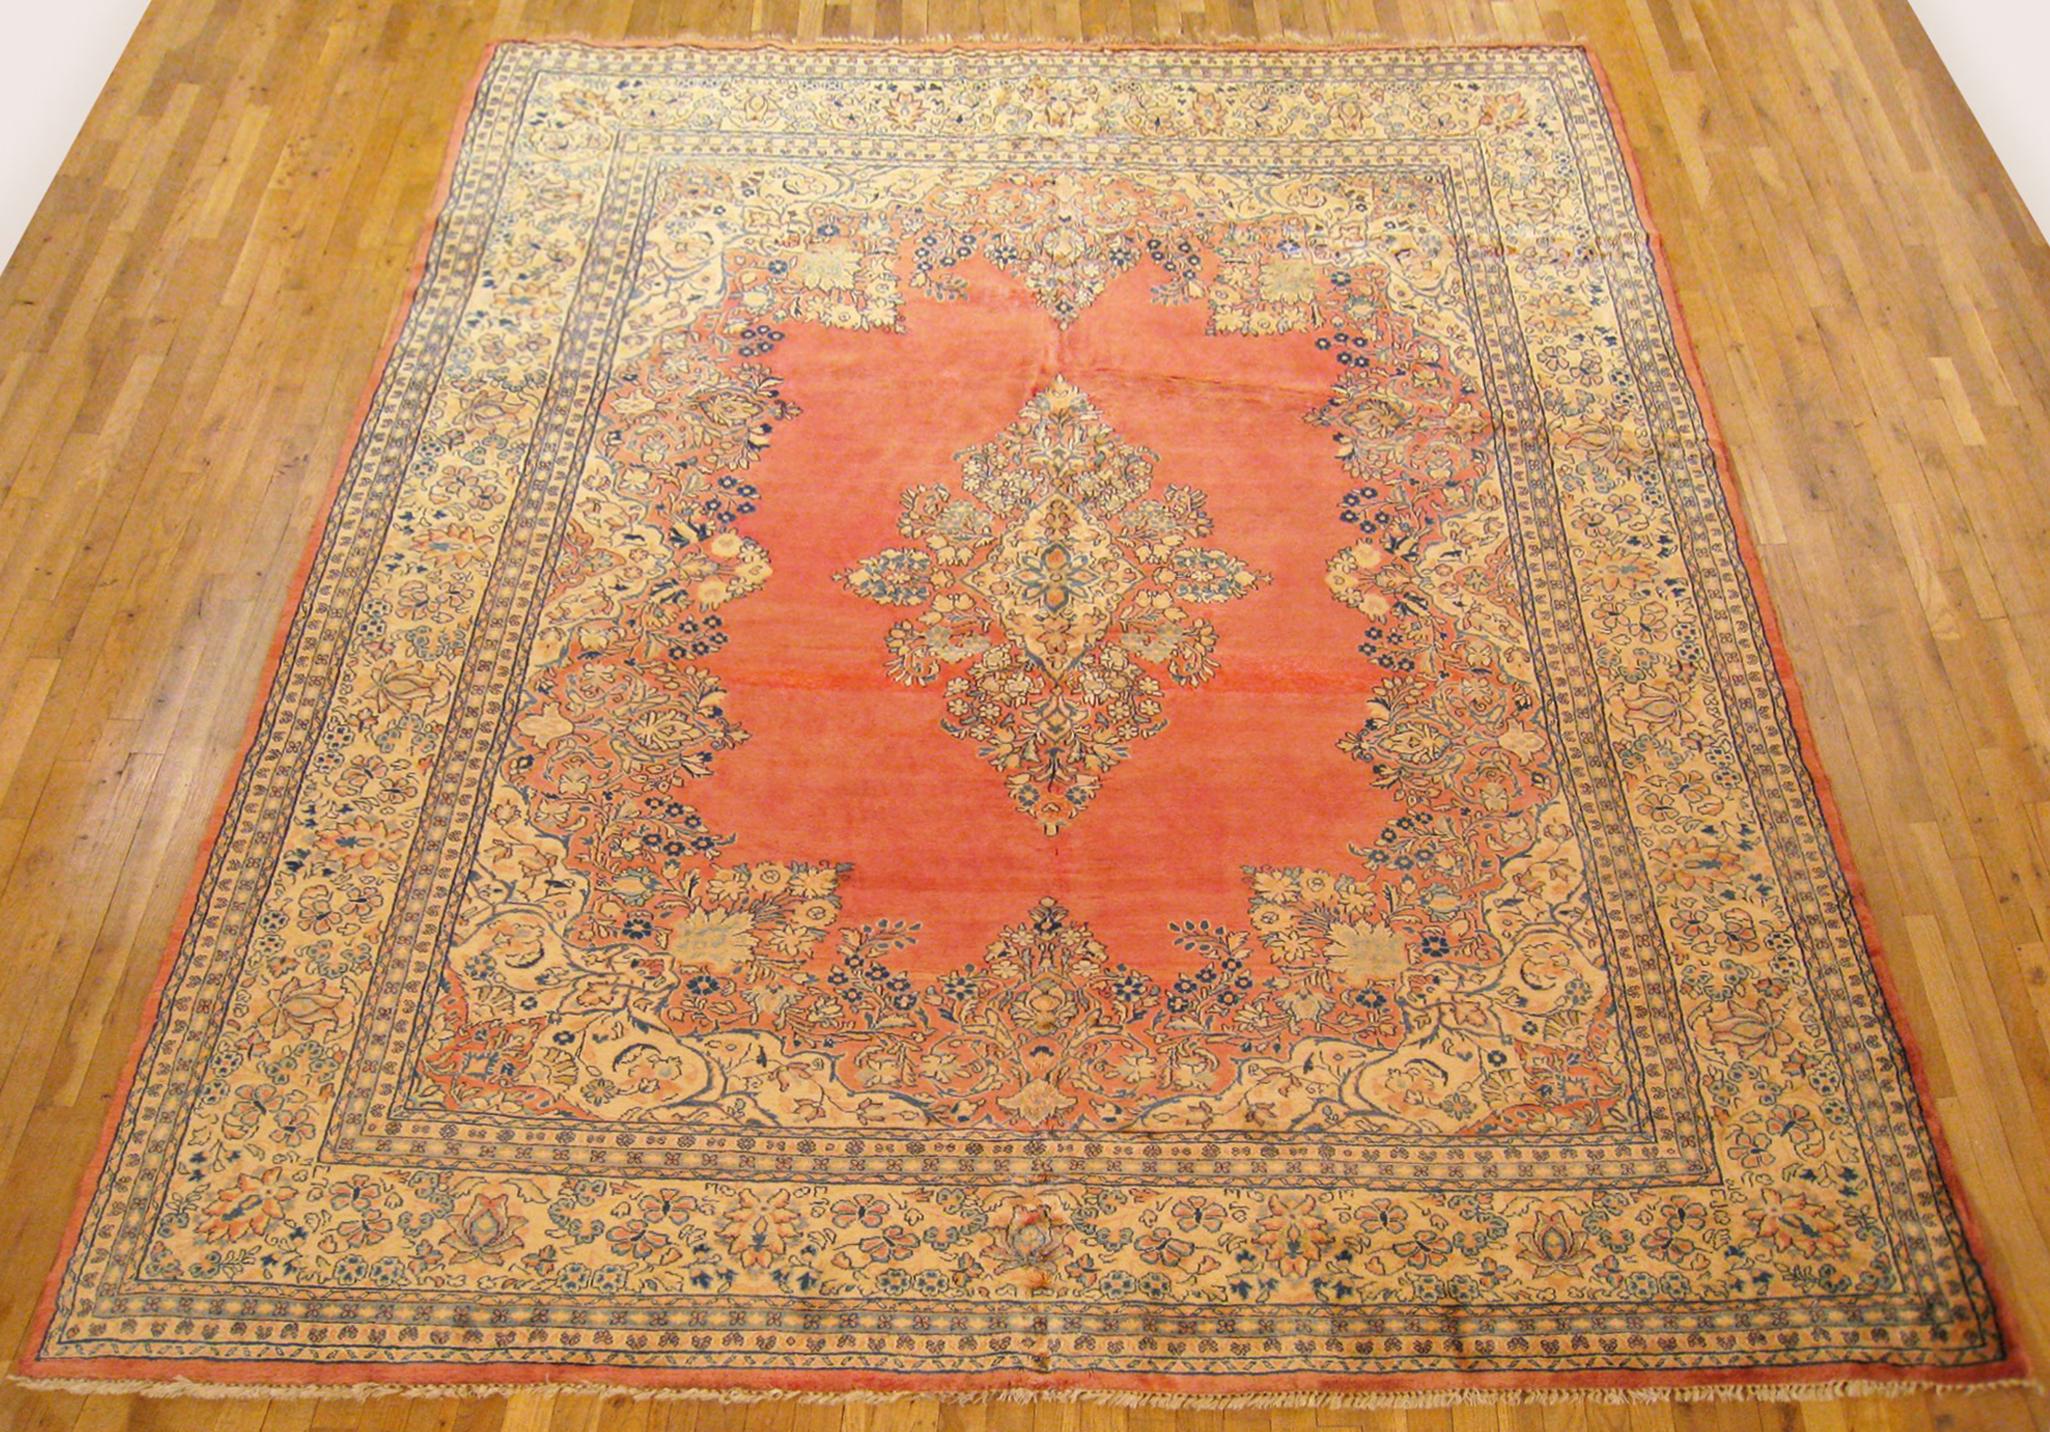 Vintage Persian Sarouk oriental rug, circa 1940, room size.

A vintage Persian Sarouk oriental rug, size 11'8